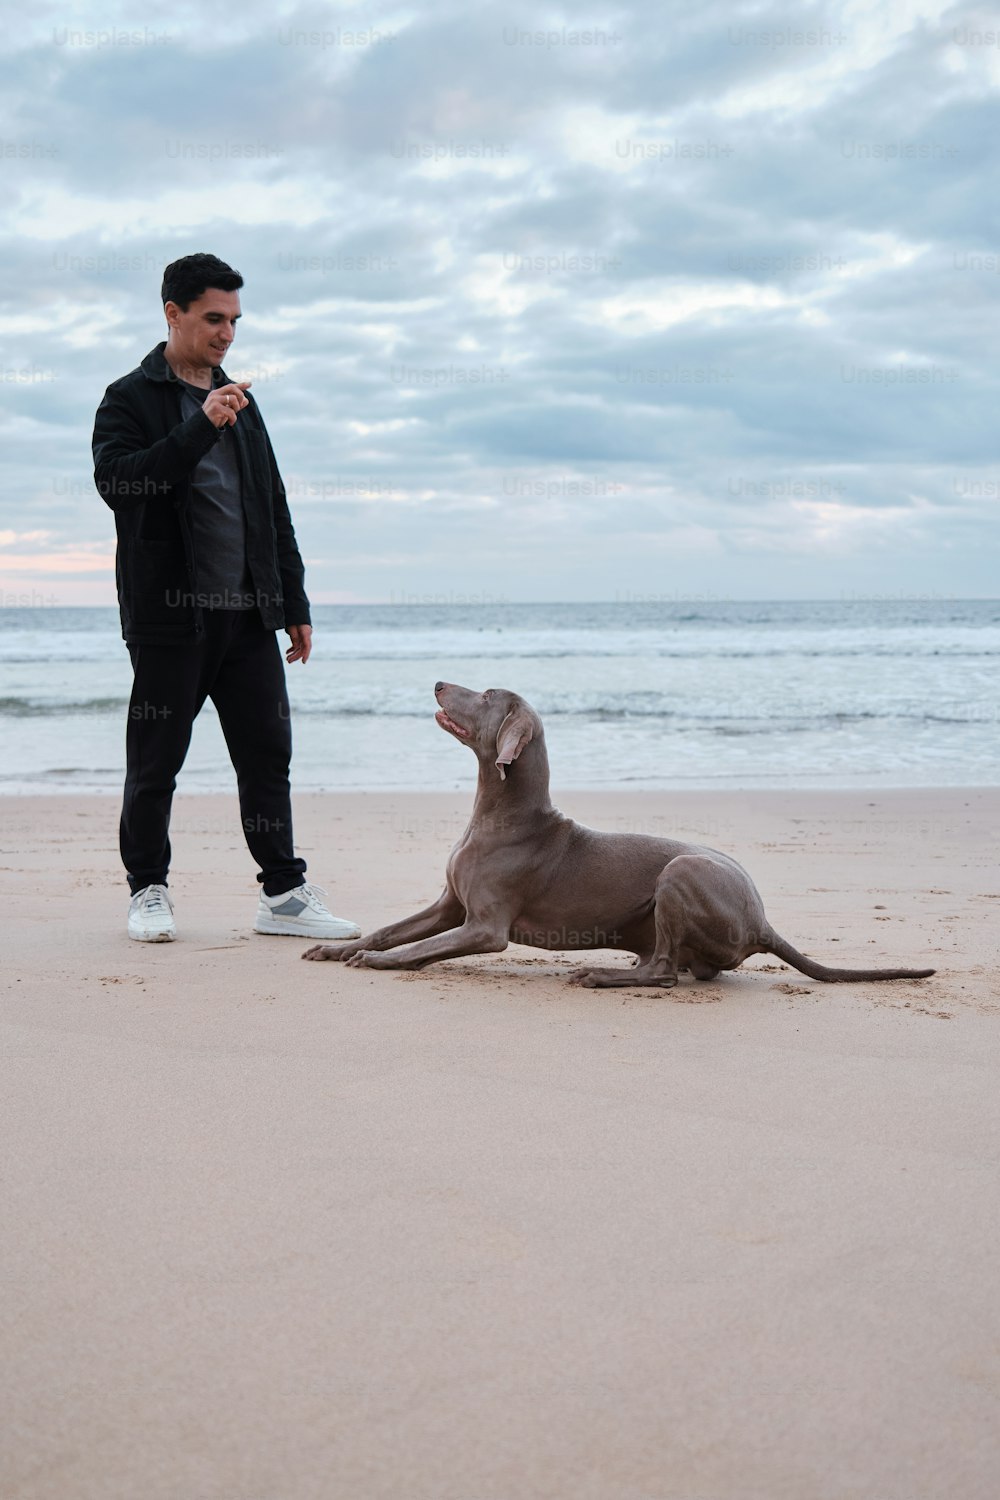 a man standing next to a dog on a beach